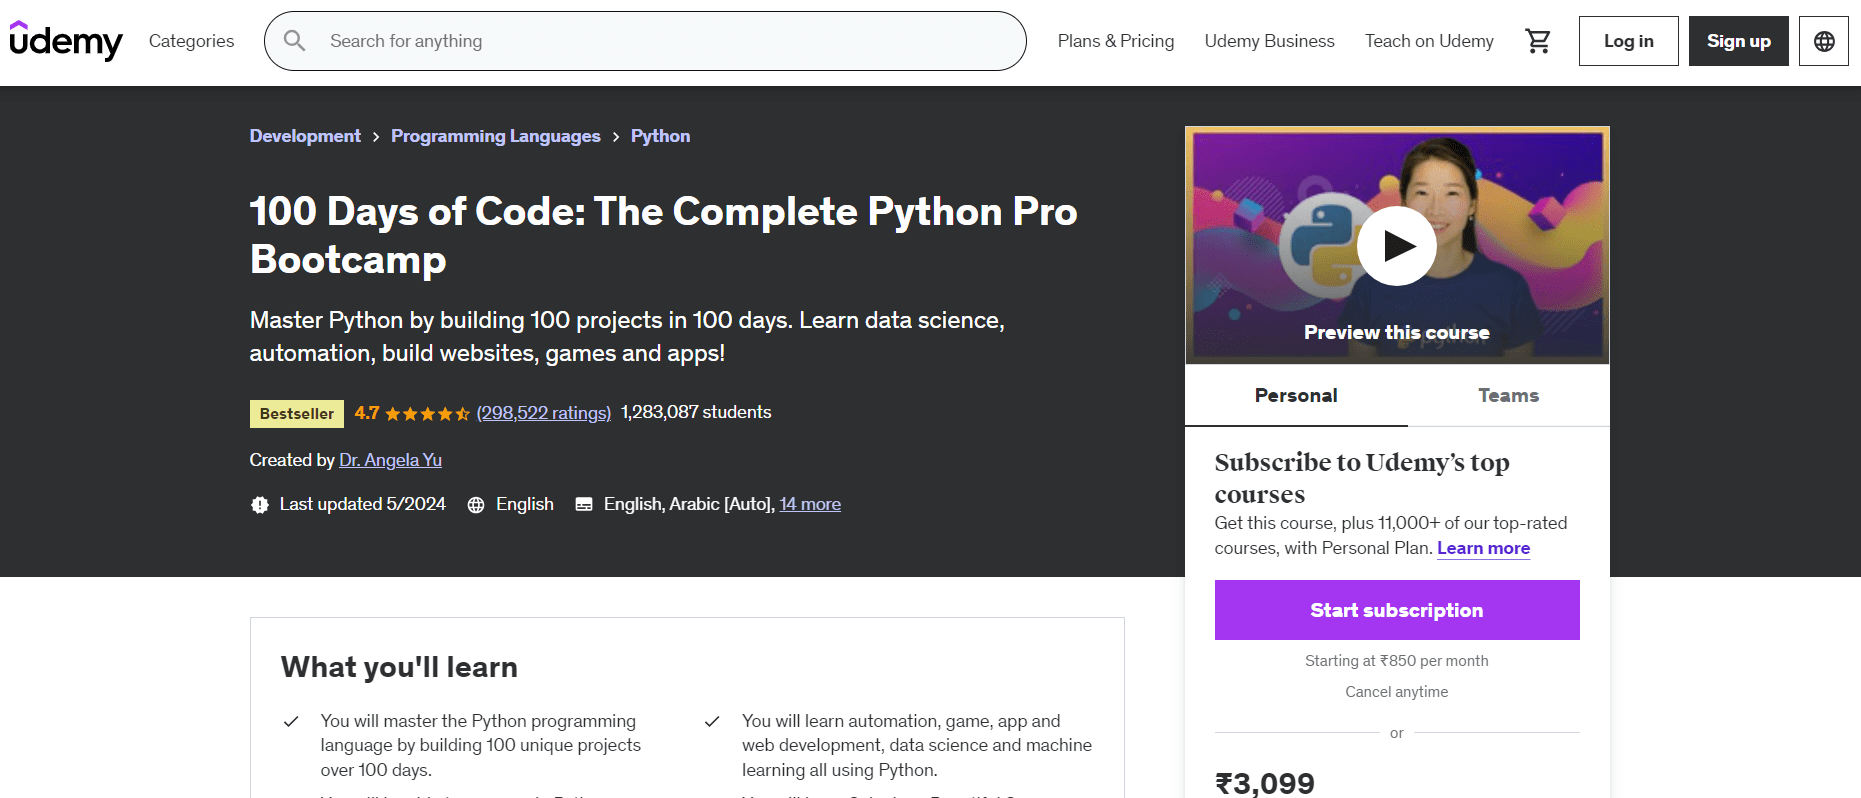 #2 Python Bootcamp - Udemy 100 Days of Coe